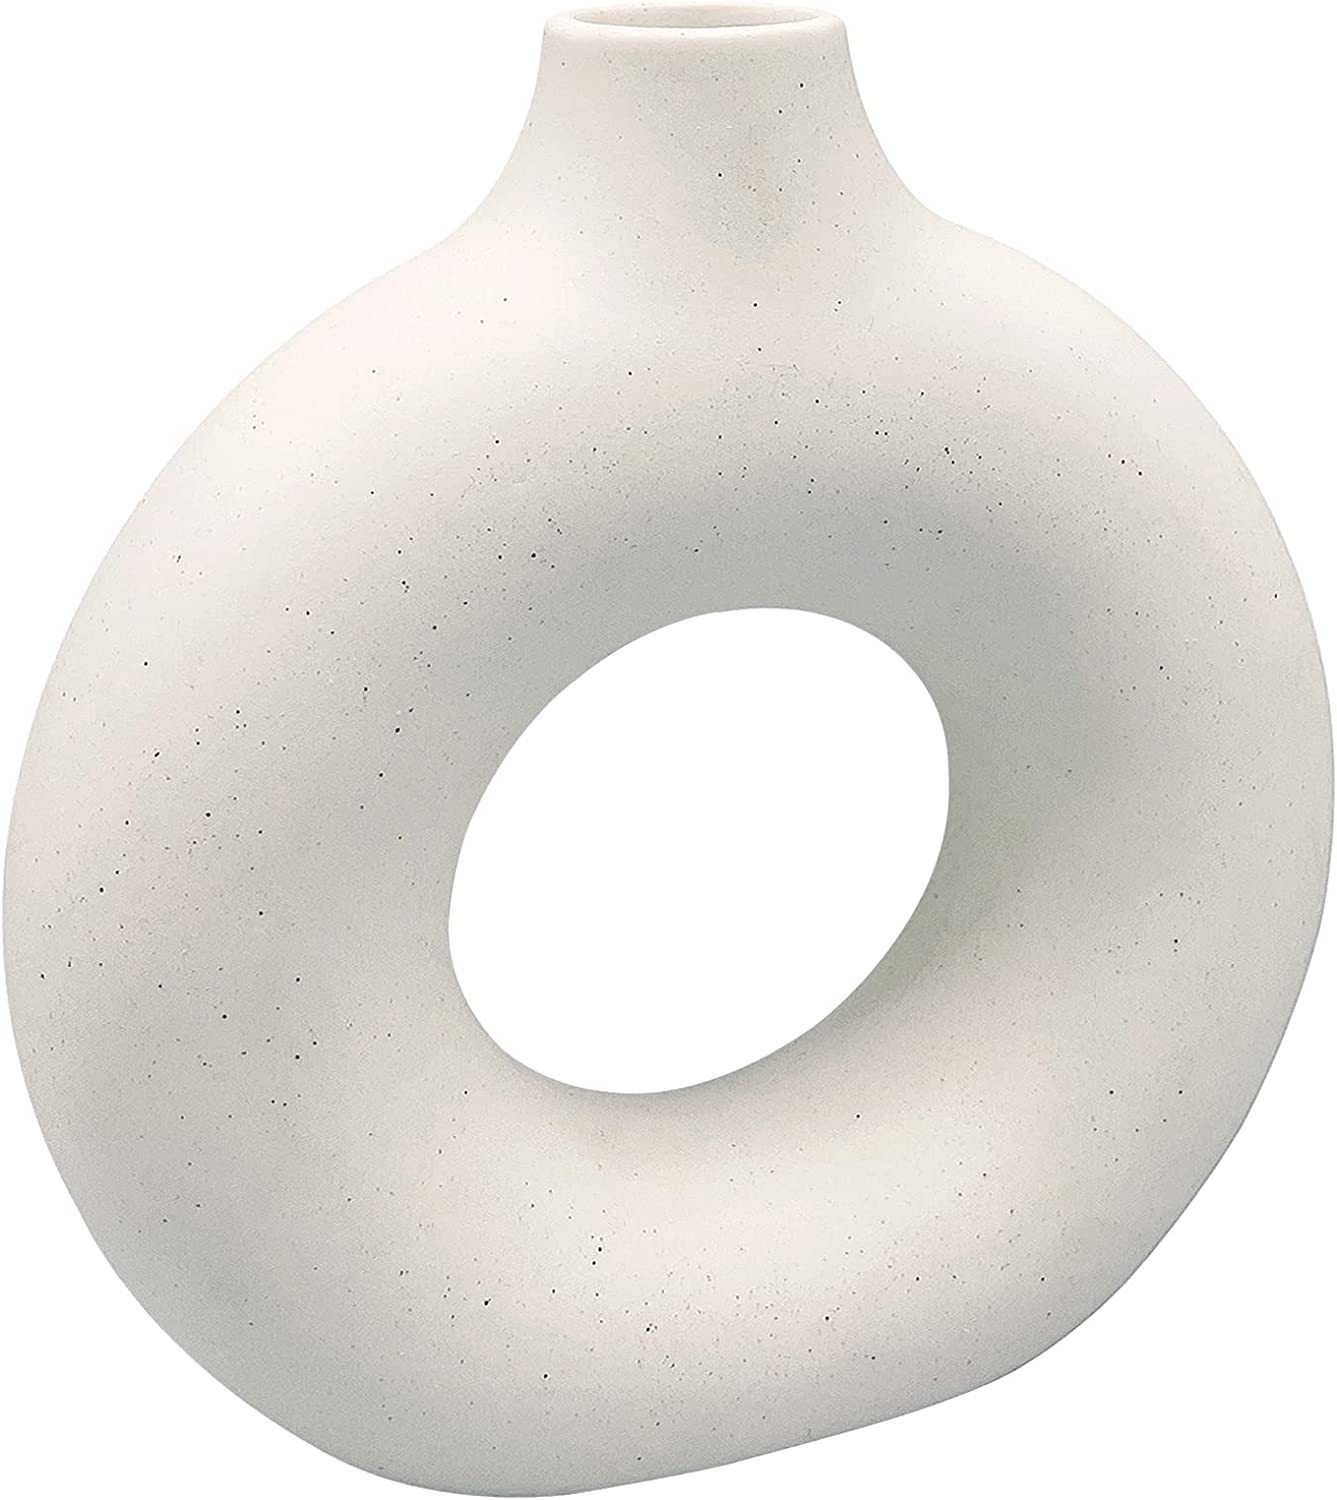 Primary image for White Ceramic Vase - For Modern Home Decor, Round Matte Pampas, Decorative Gift.